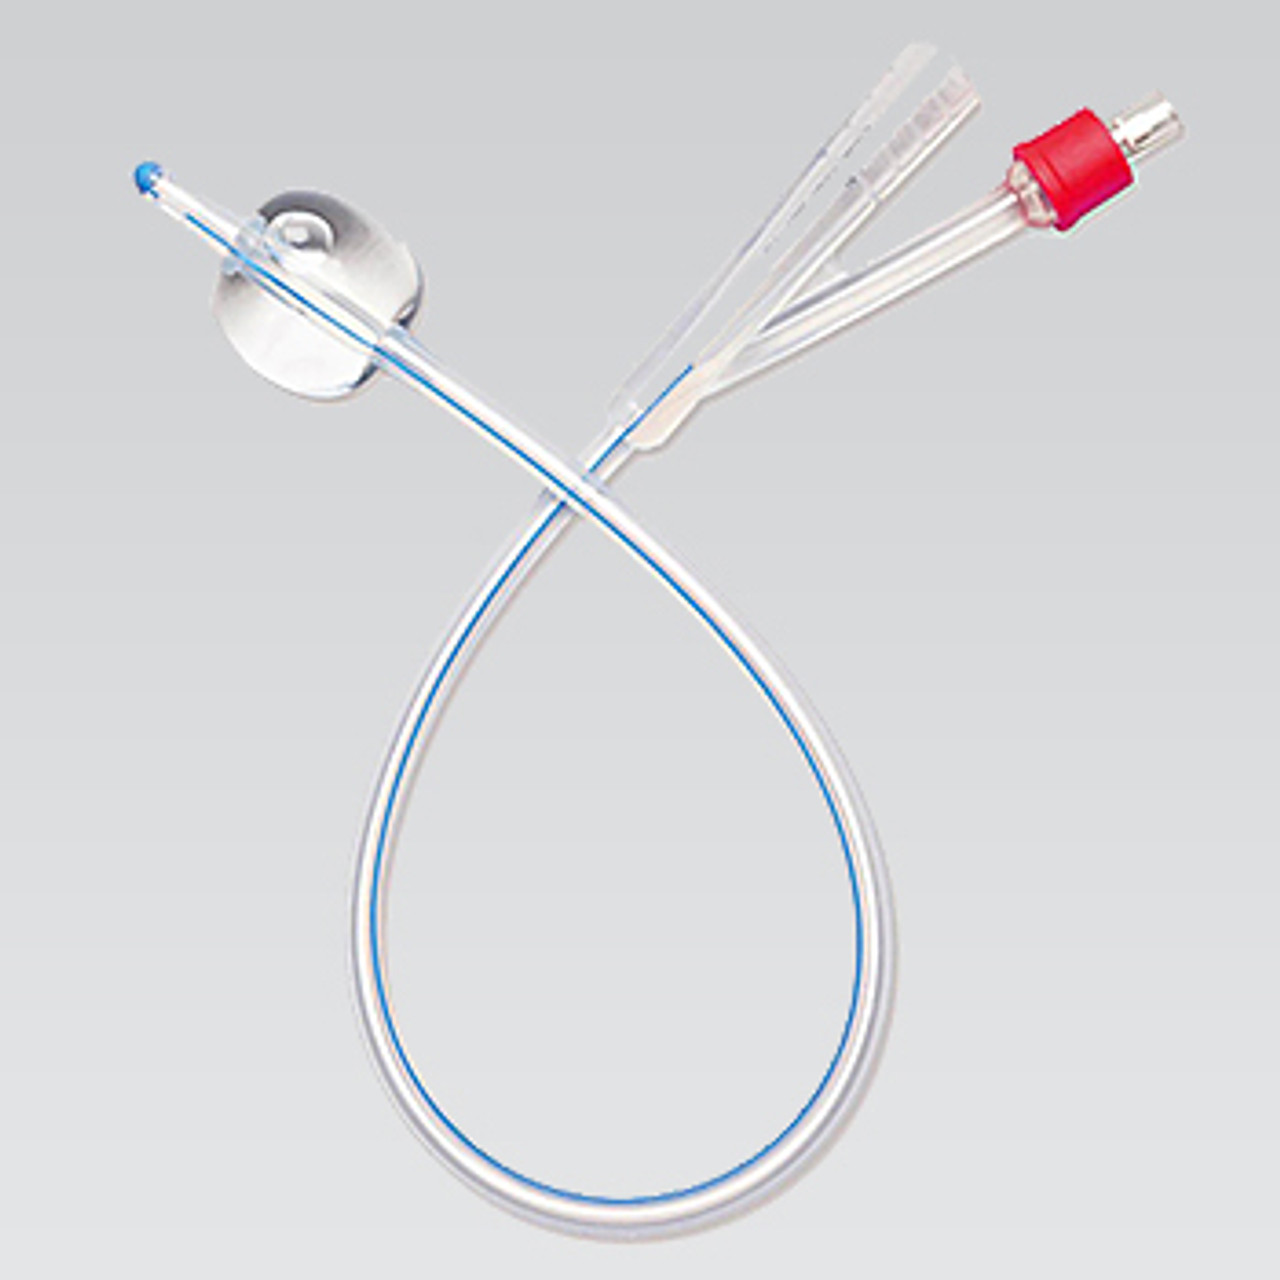 Foley Catheters